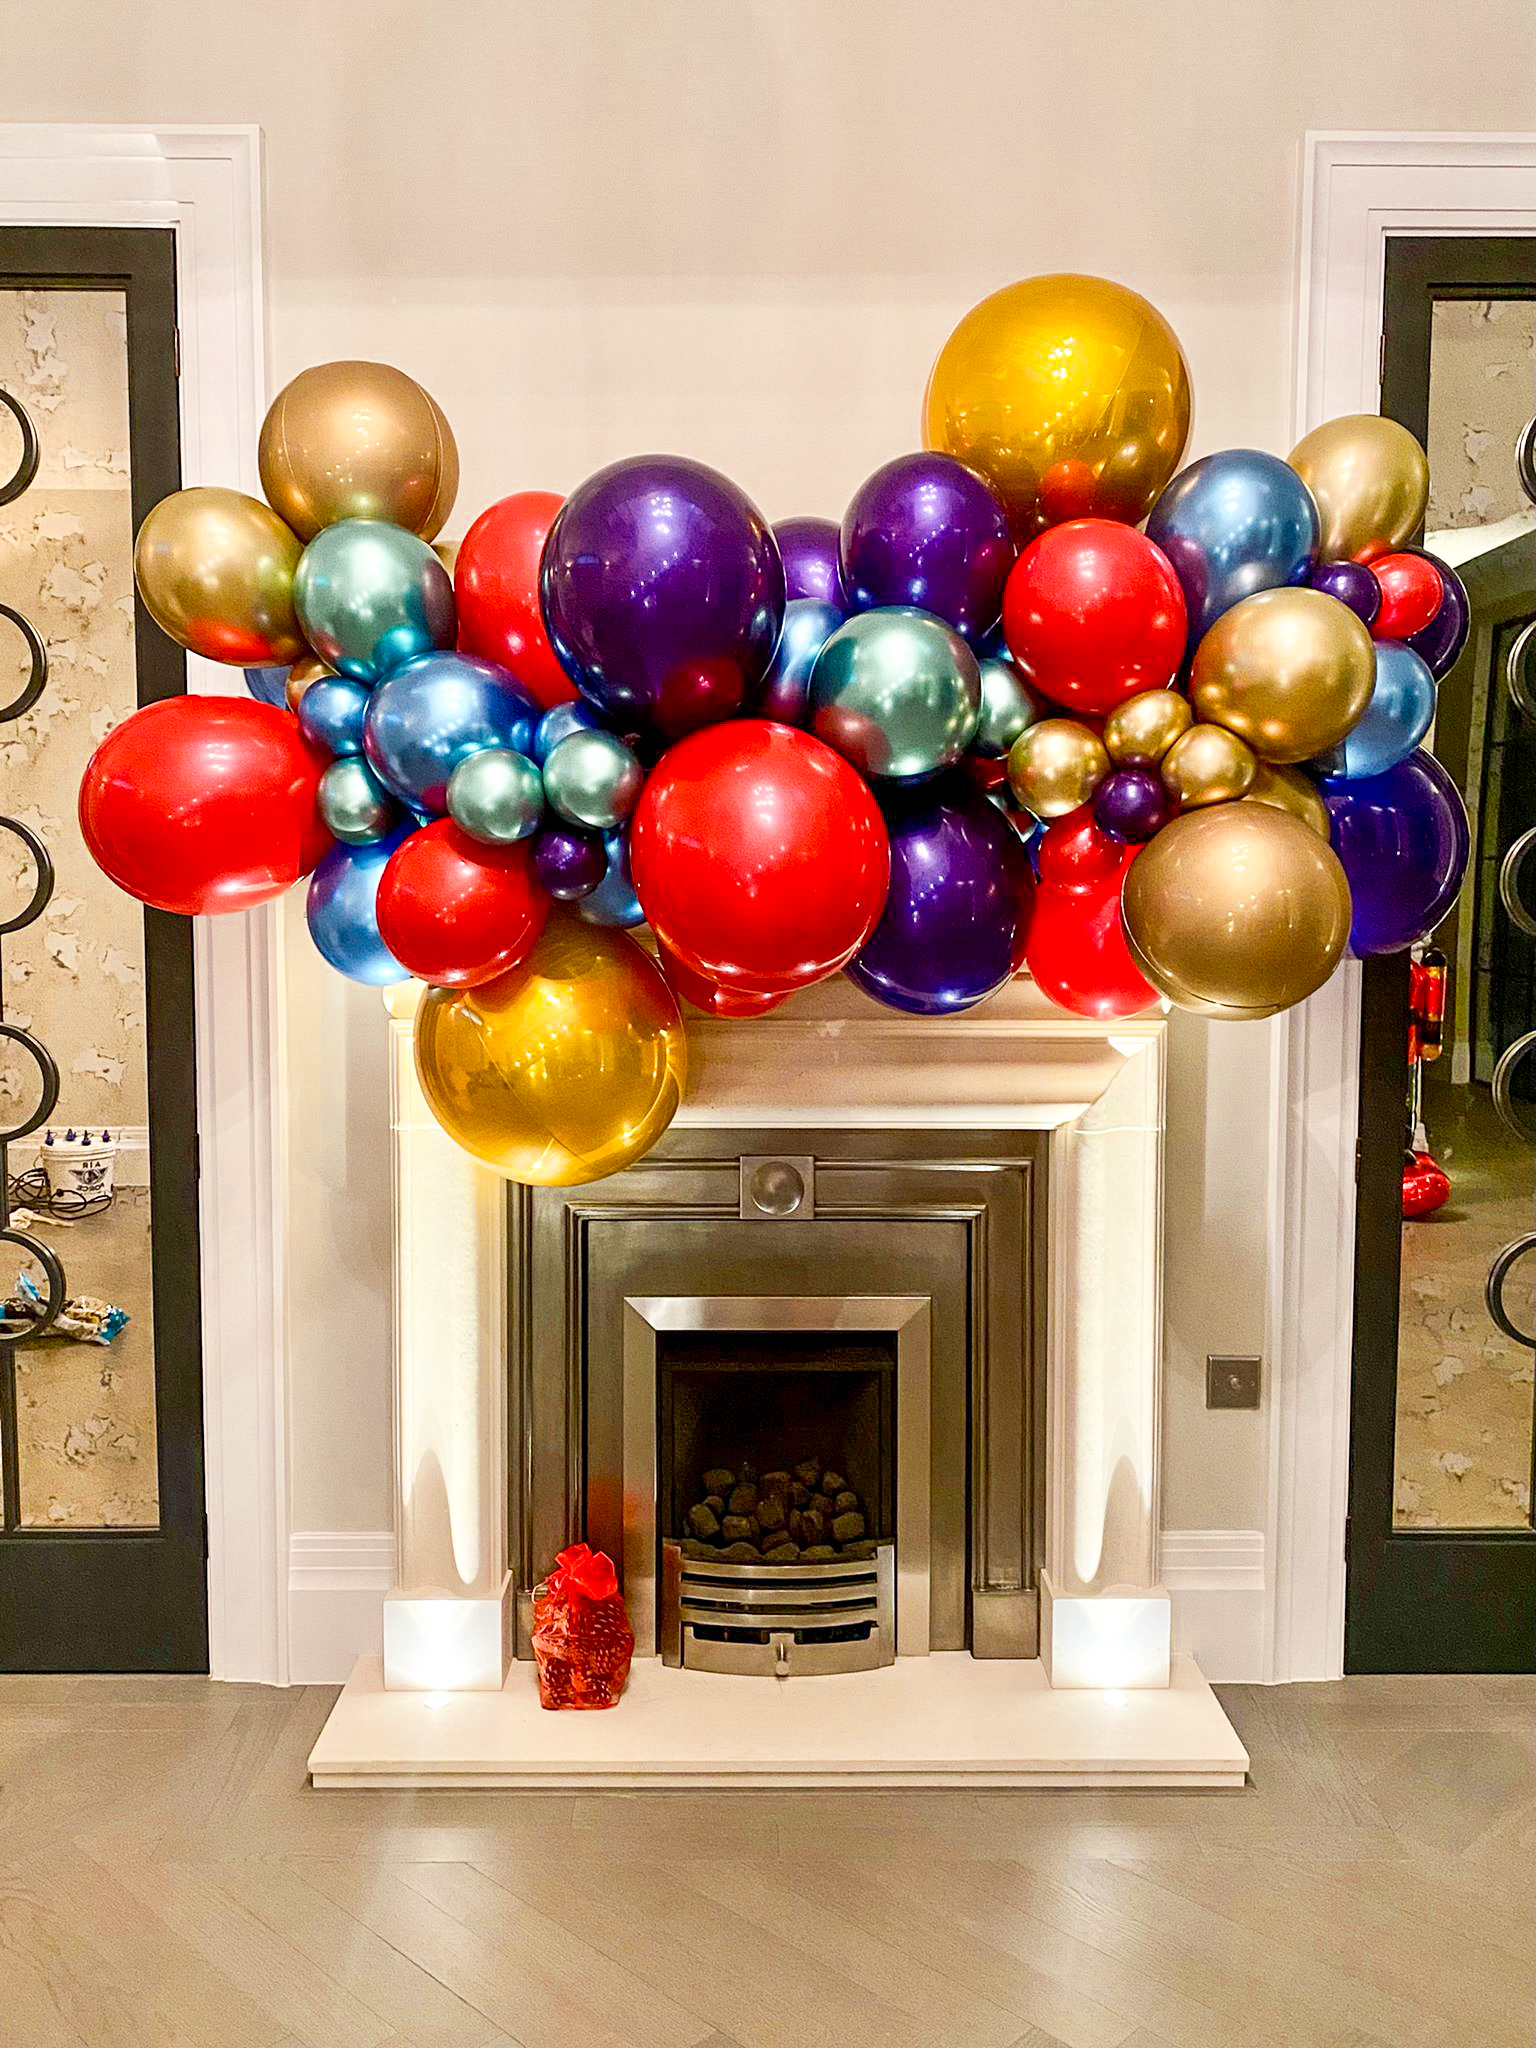 Fireplace Balloon Installations - By Bubblegum Balloons